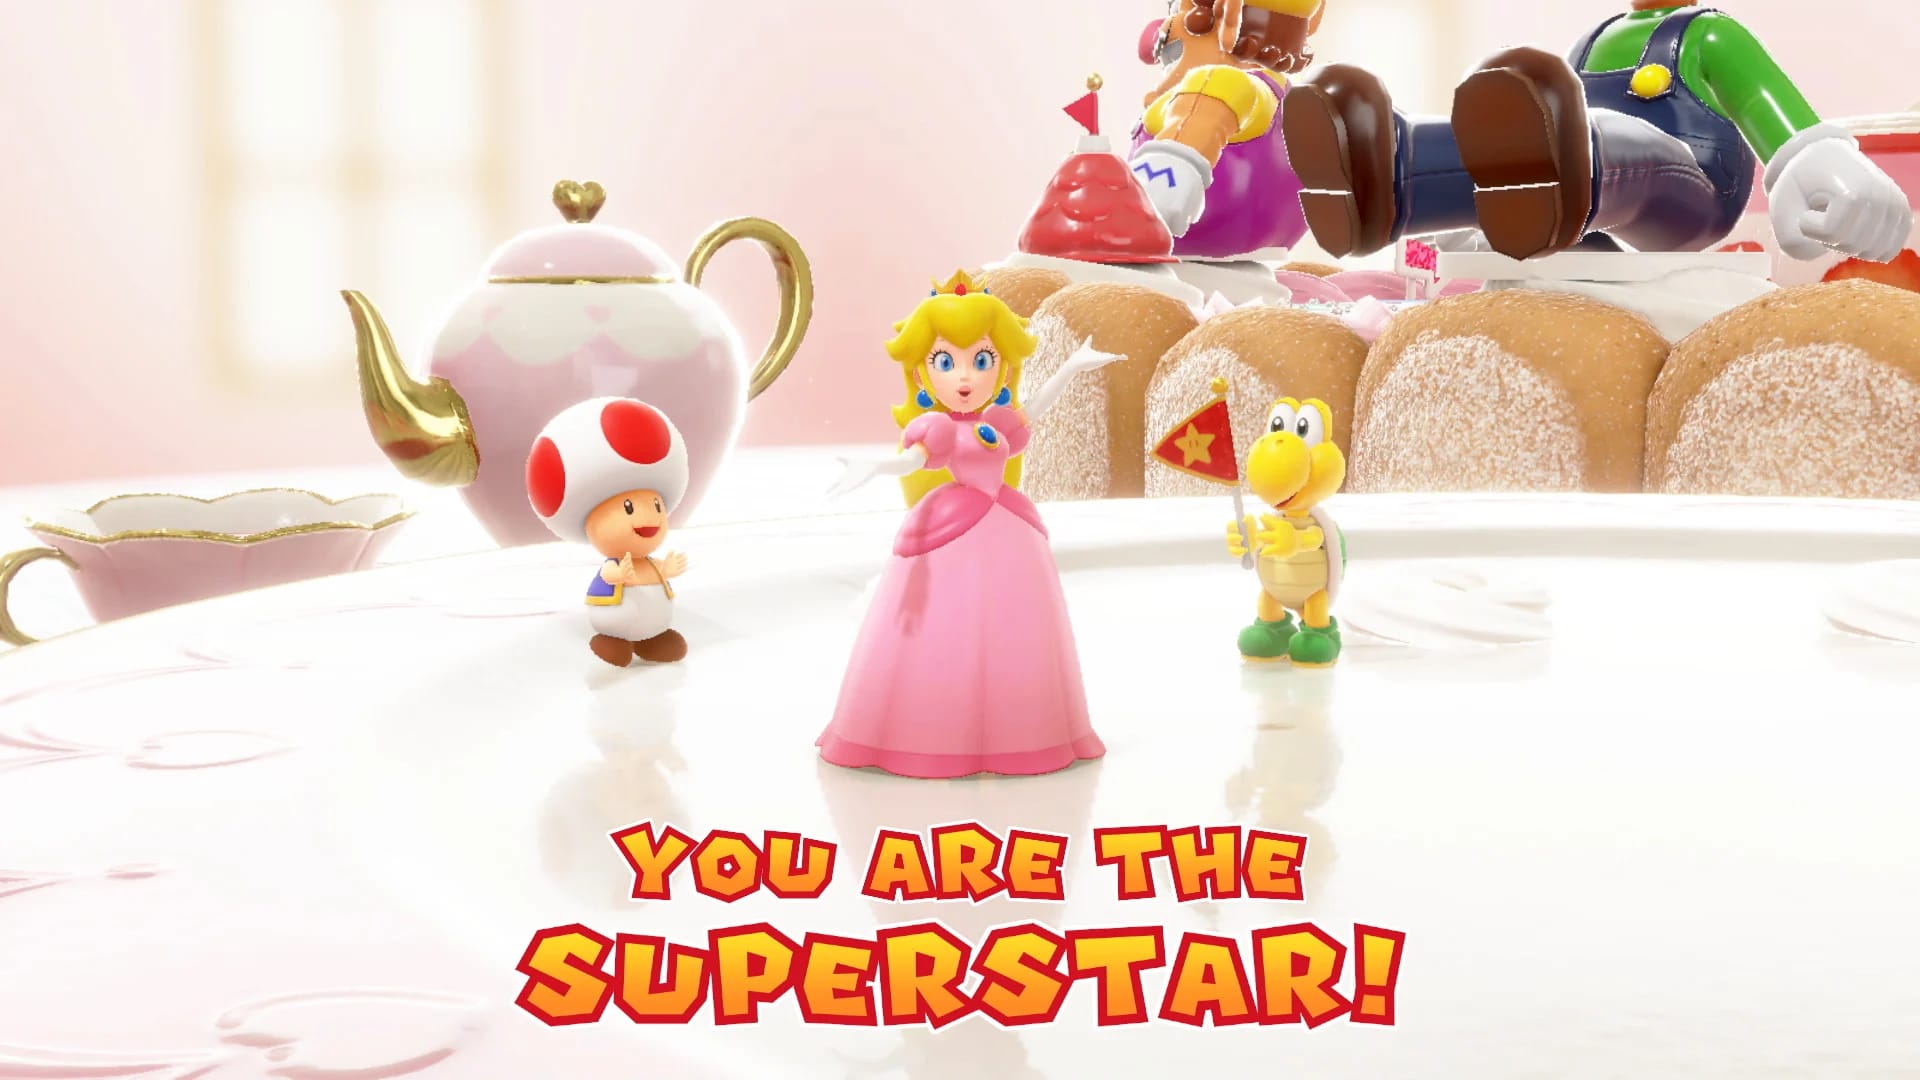 Mario party superstars screenshot 1 2